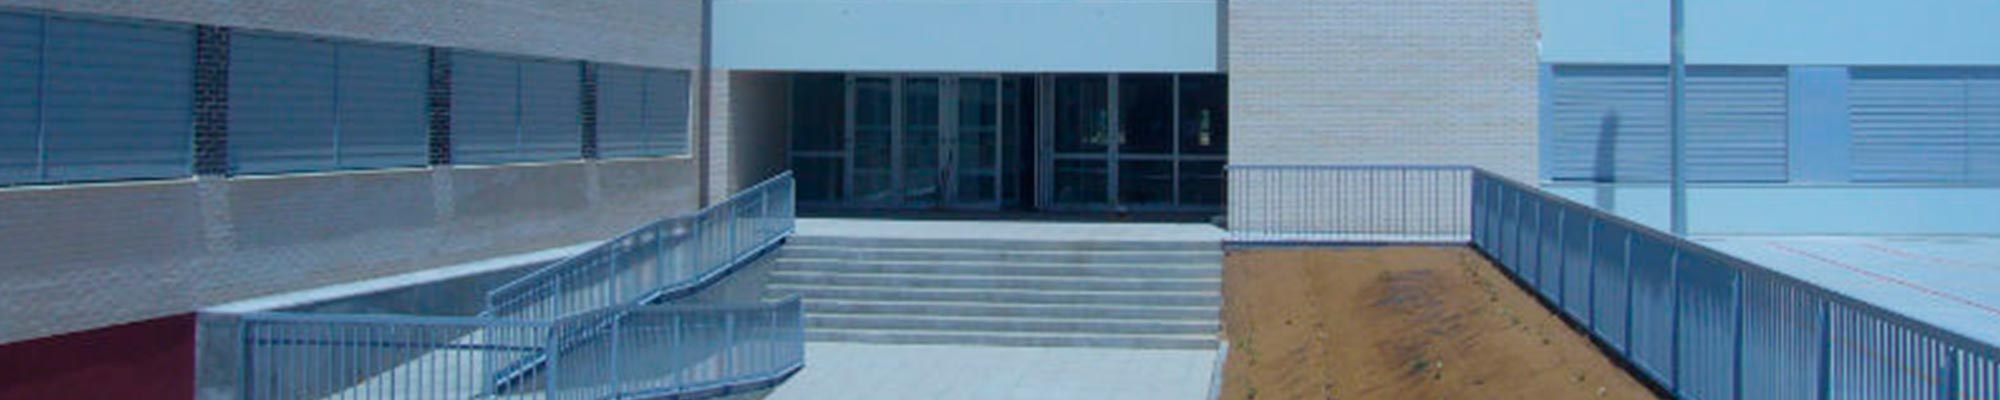 Institute of Secondary Education Parque Goya II